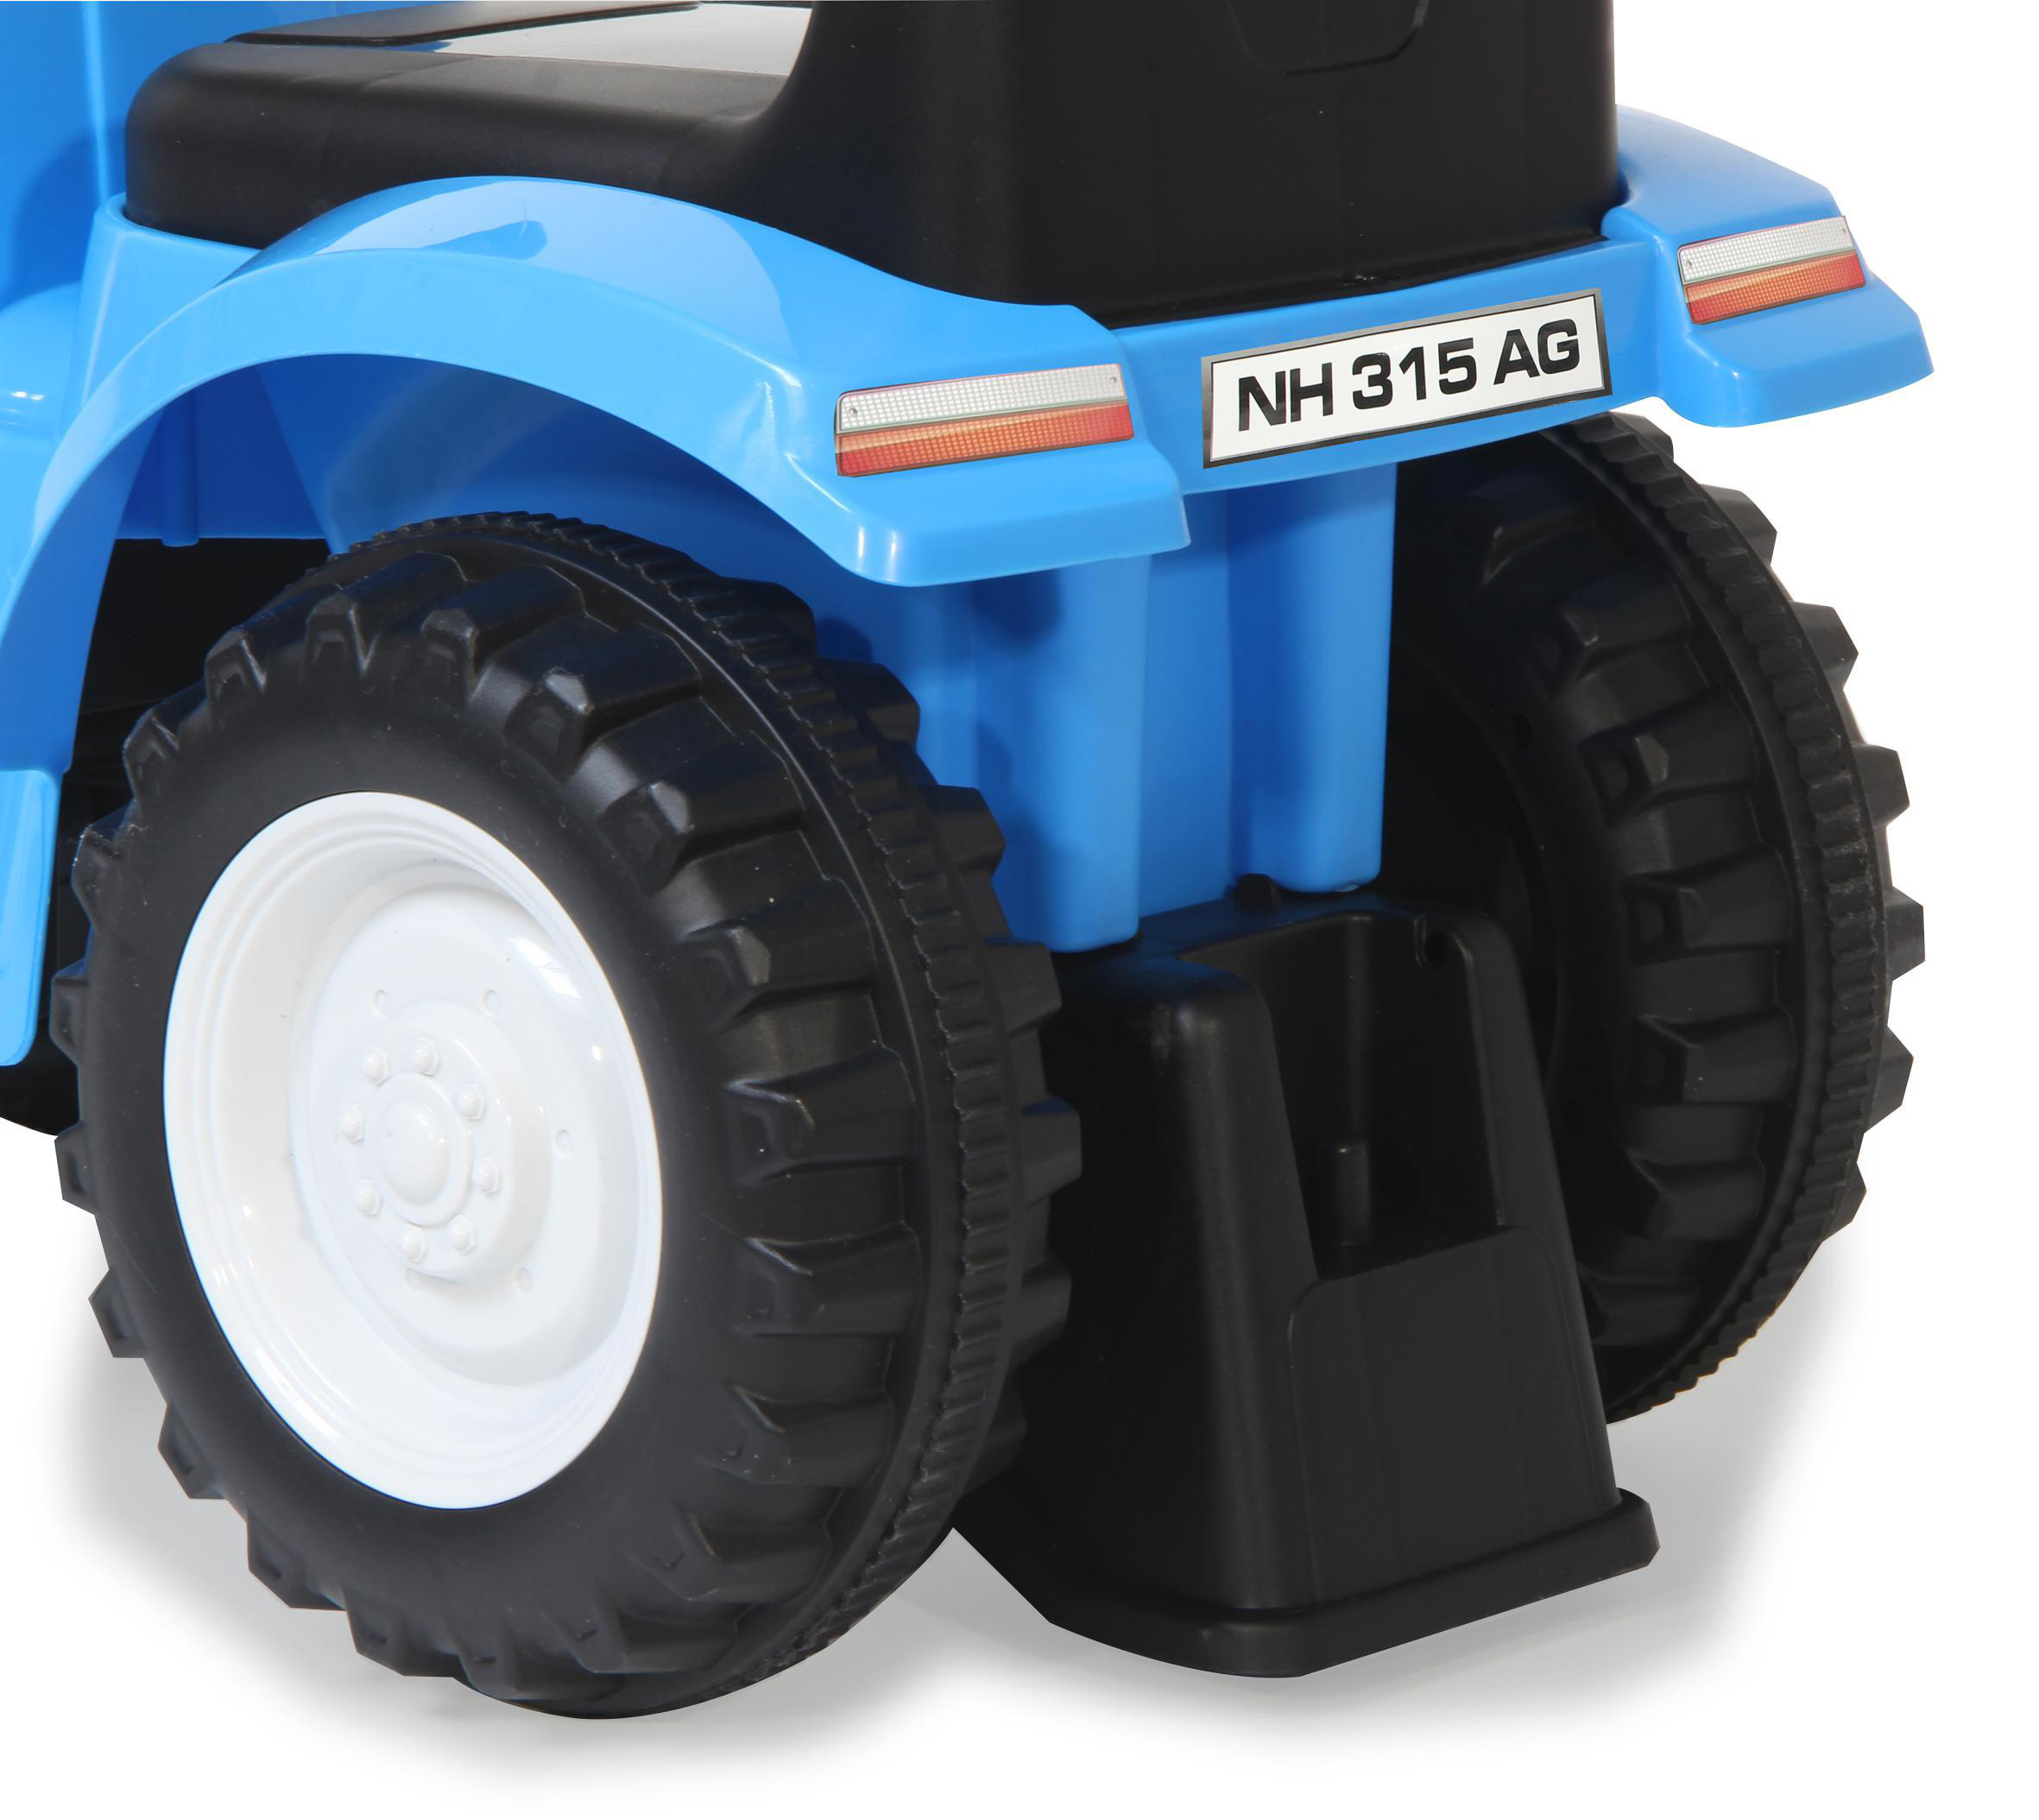 Kinderfahrzeug T7 Traktor Rutscher Blau Blau New Holland JAMARA